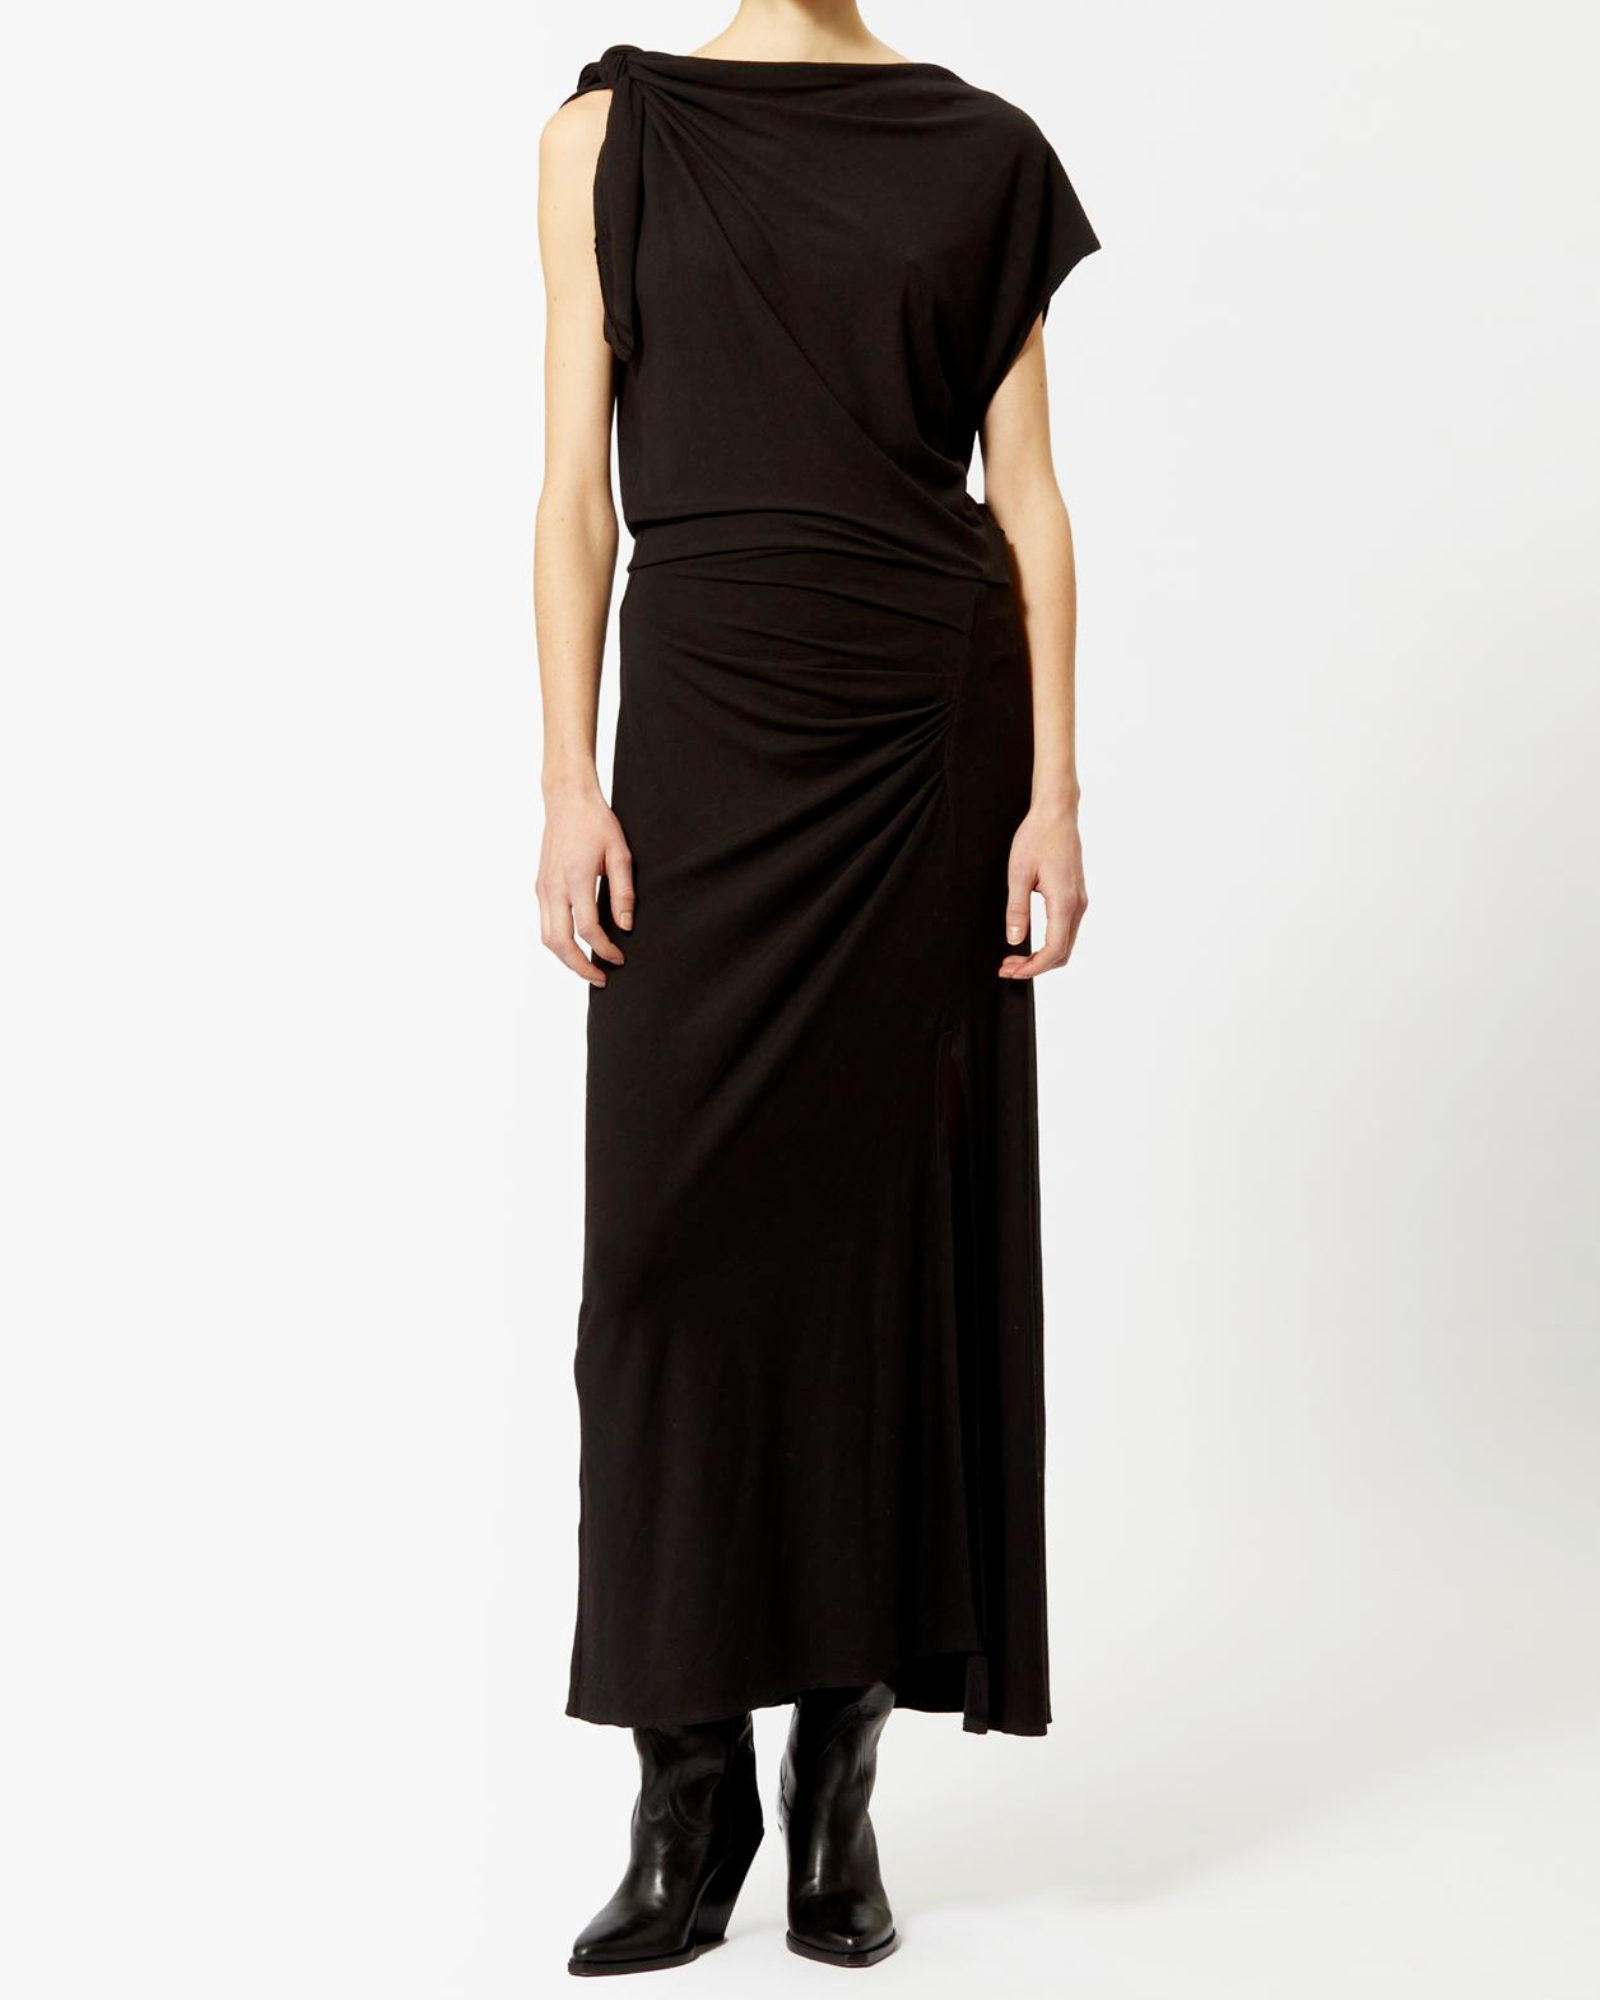 Isabel Marant Naerys Dress in Black